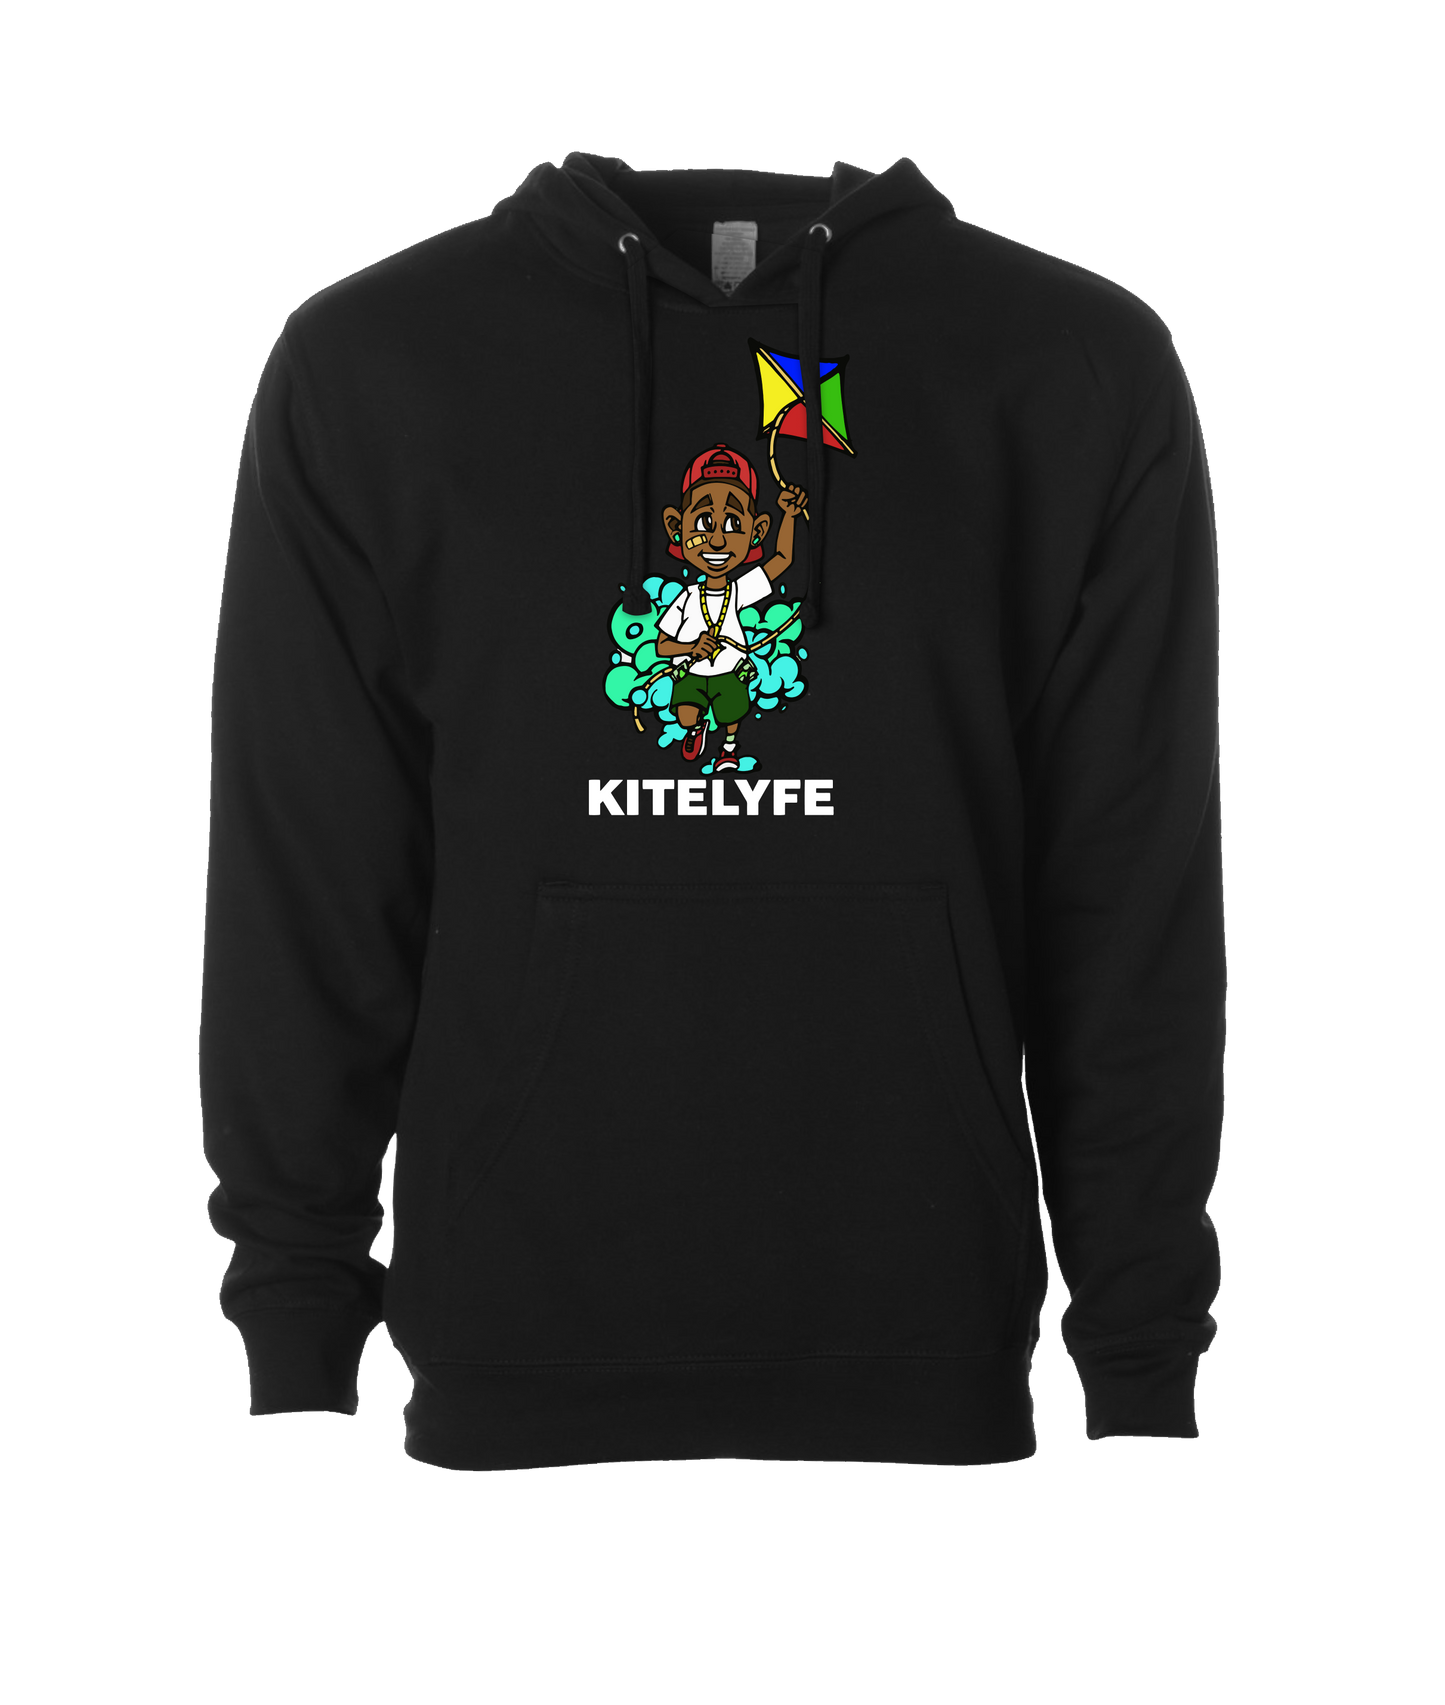 Kitelyfe - KITE - Black Hoodie